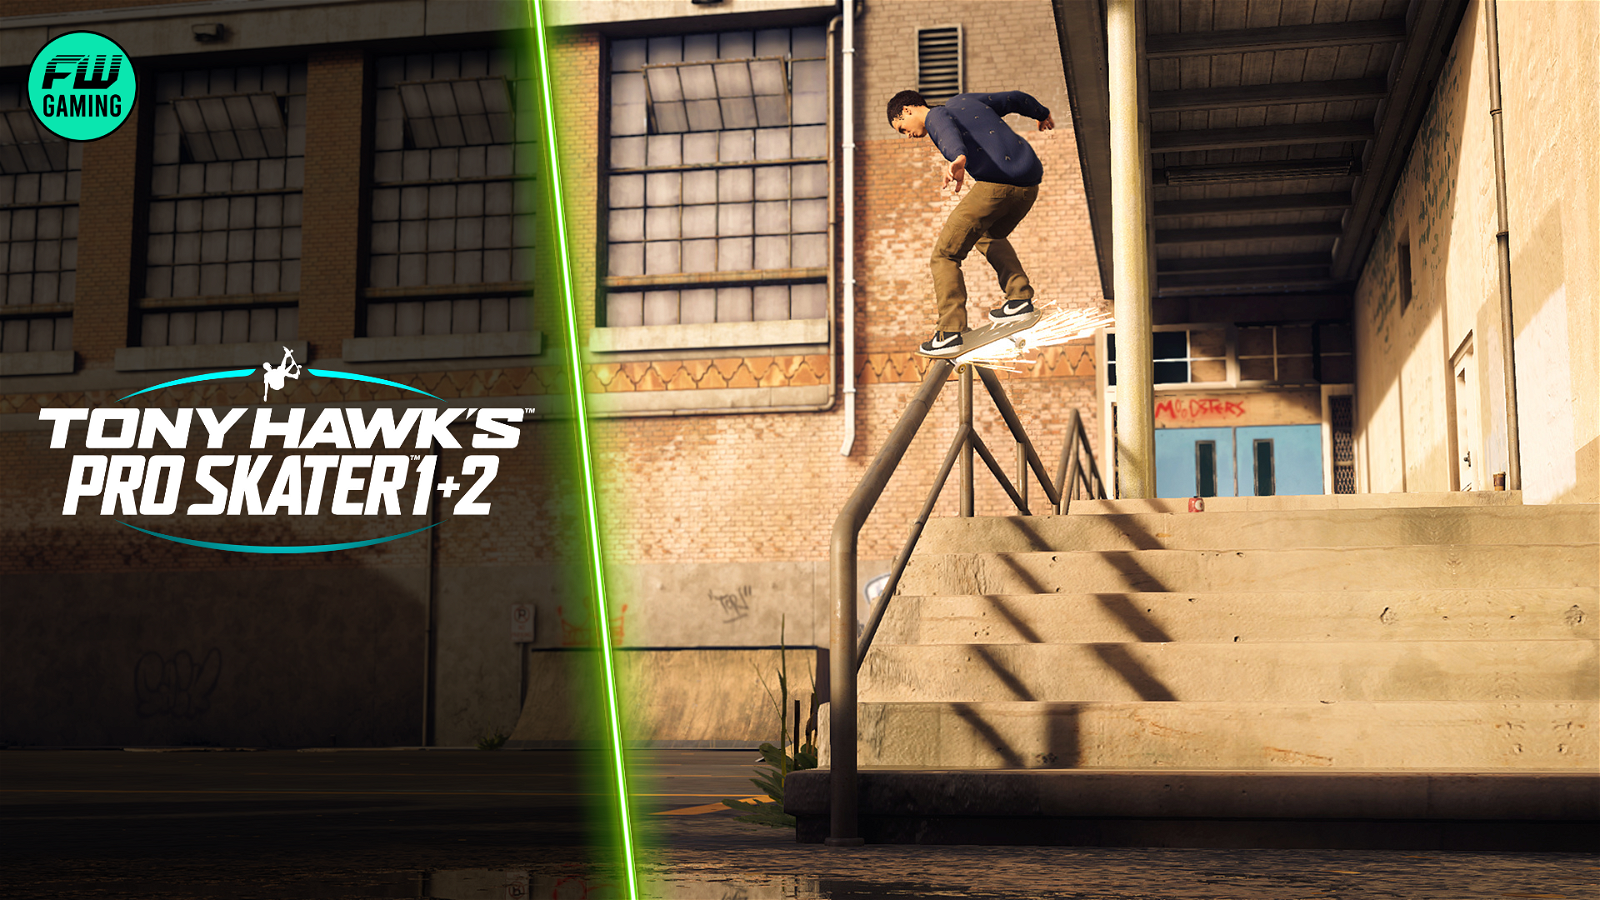 Tony Hawk's Pro Skater 1+2 remaster will feature classic pro